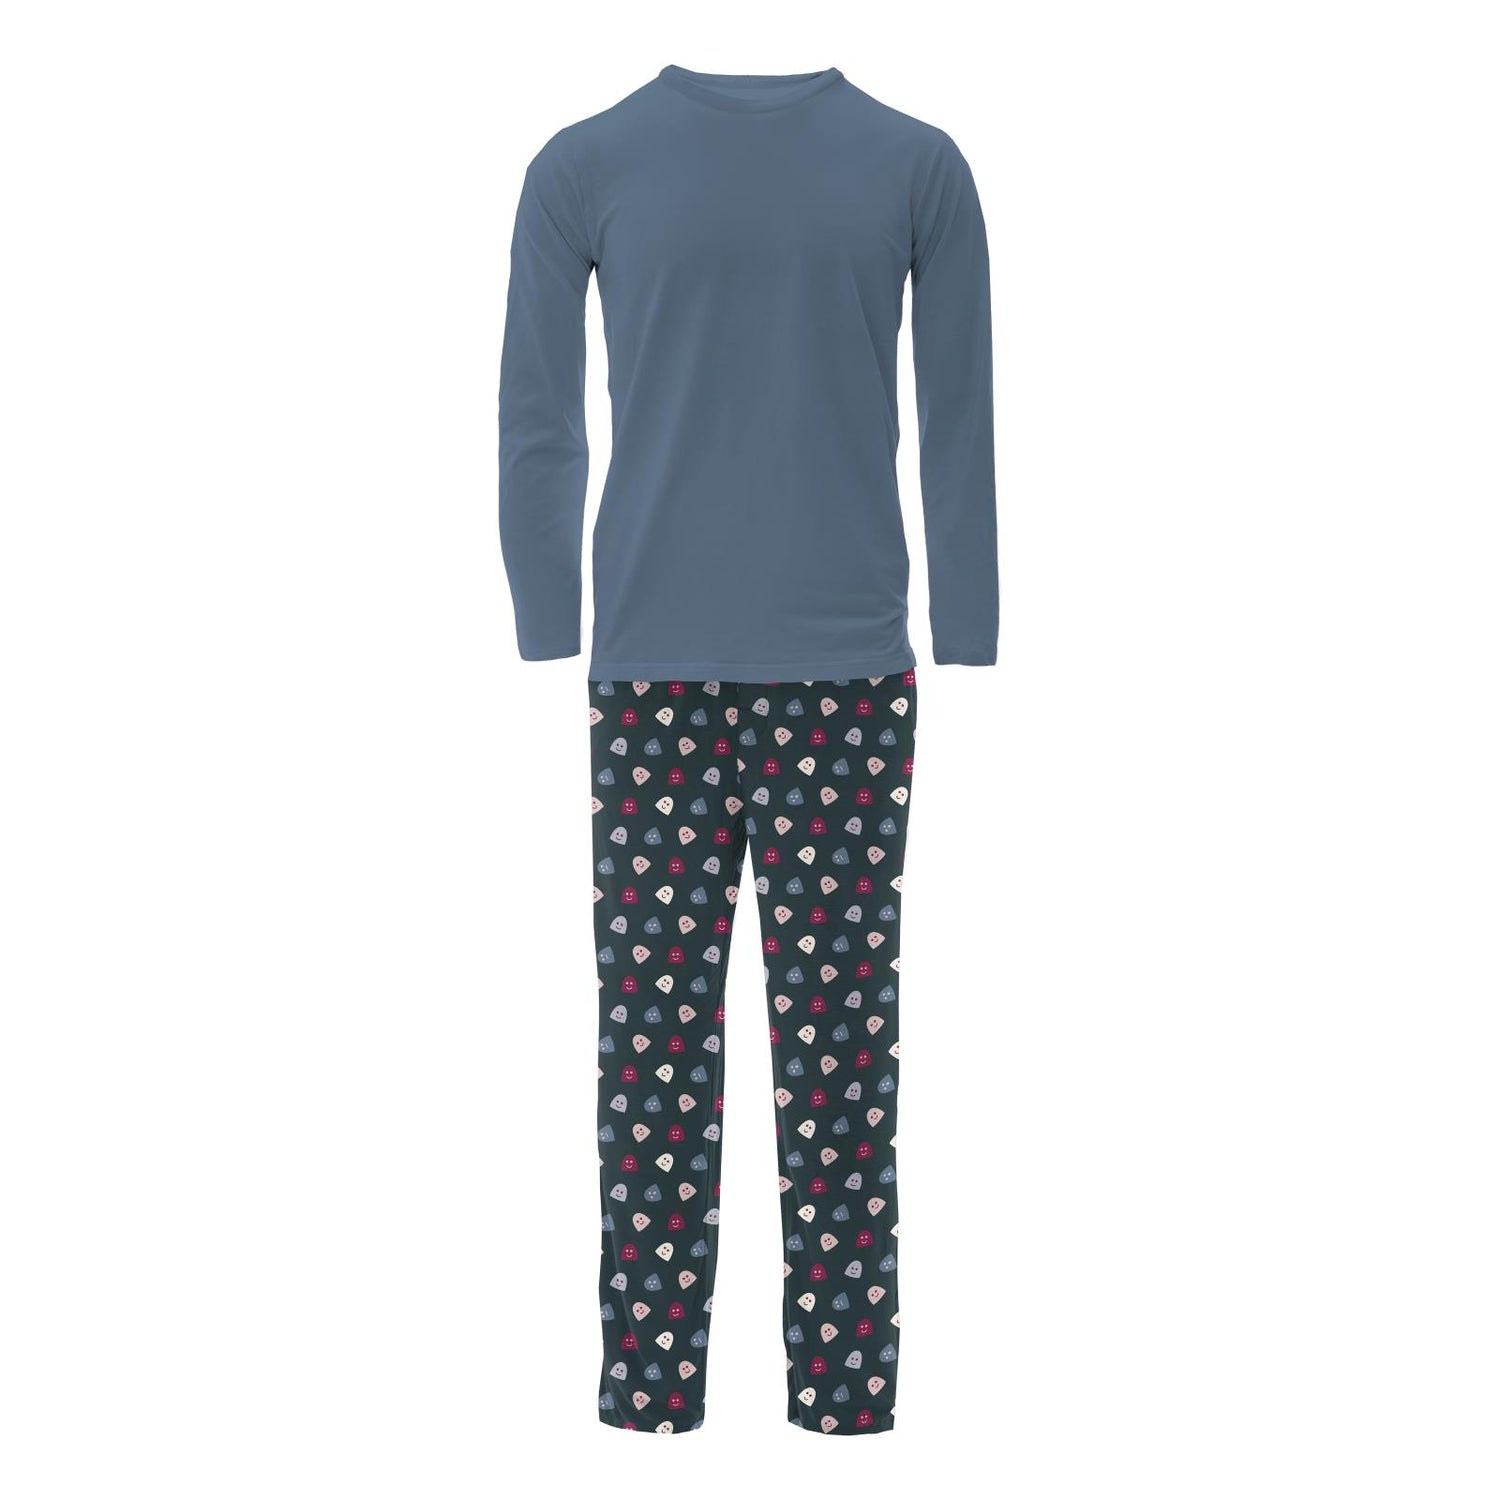 Men's Print Long Sleeve Pajama Set in Pine Happy Gumdrops